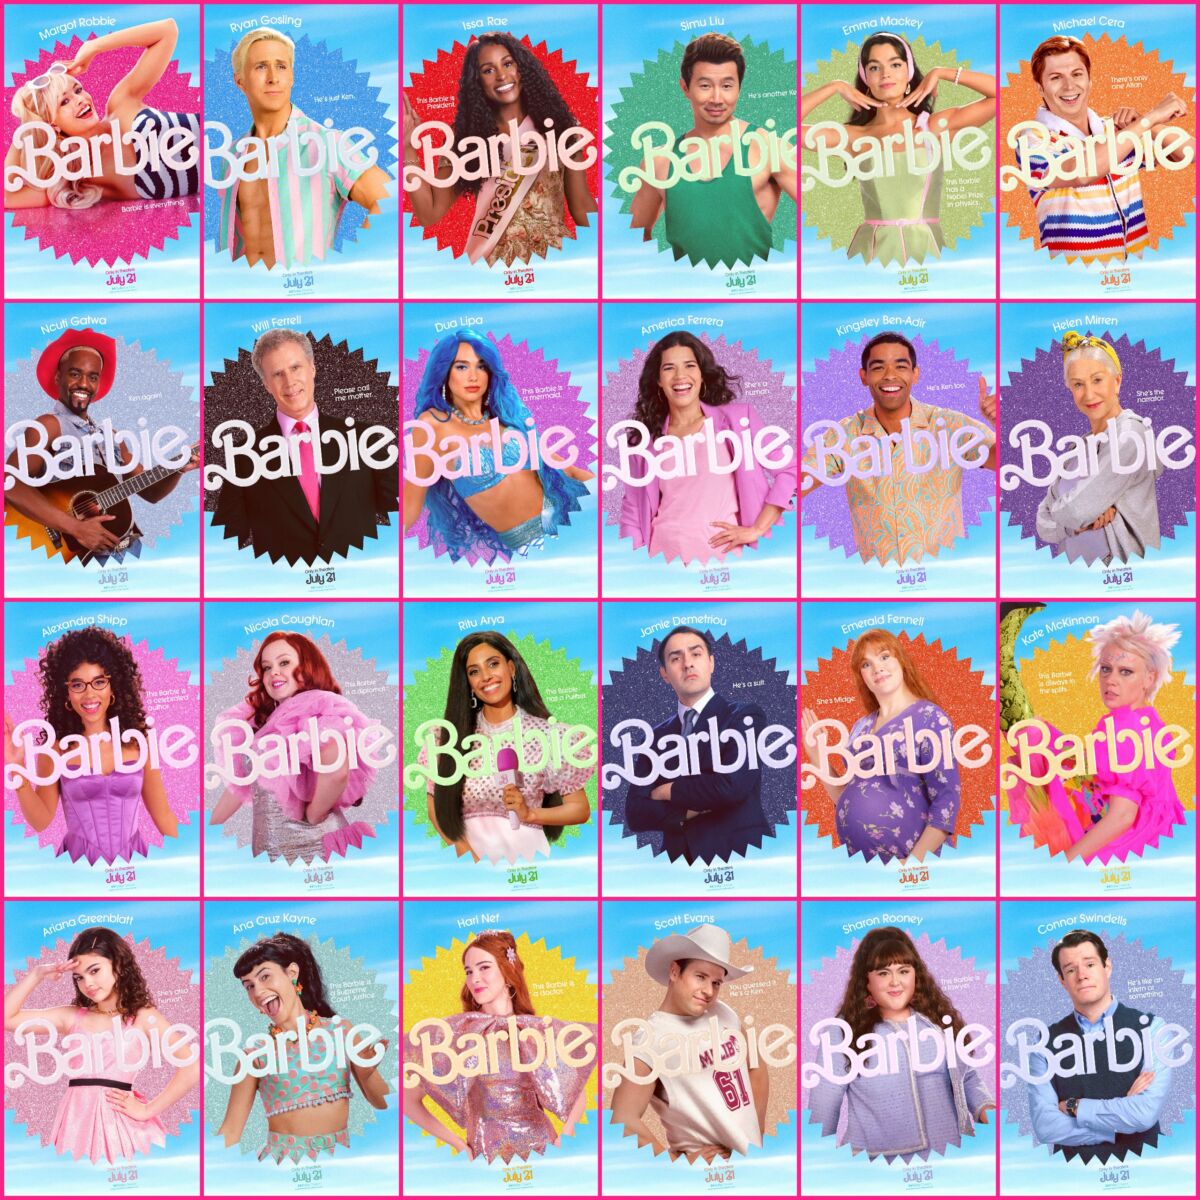 The Barbie Movie's Cast